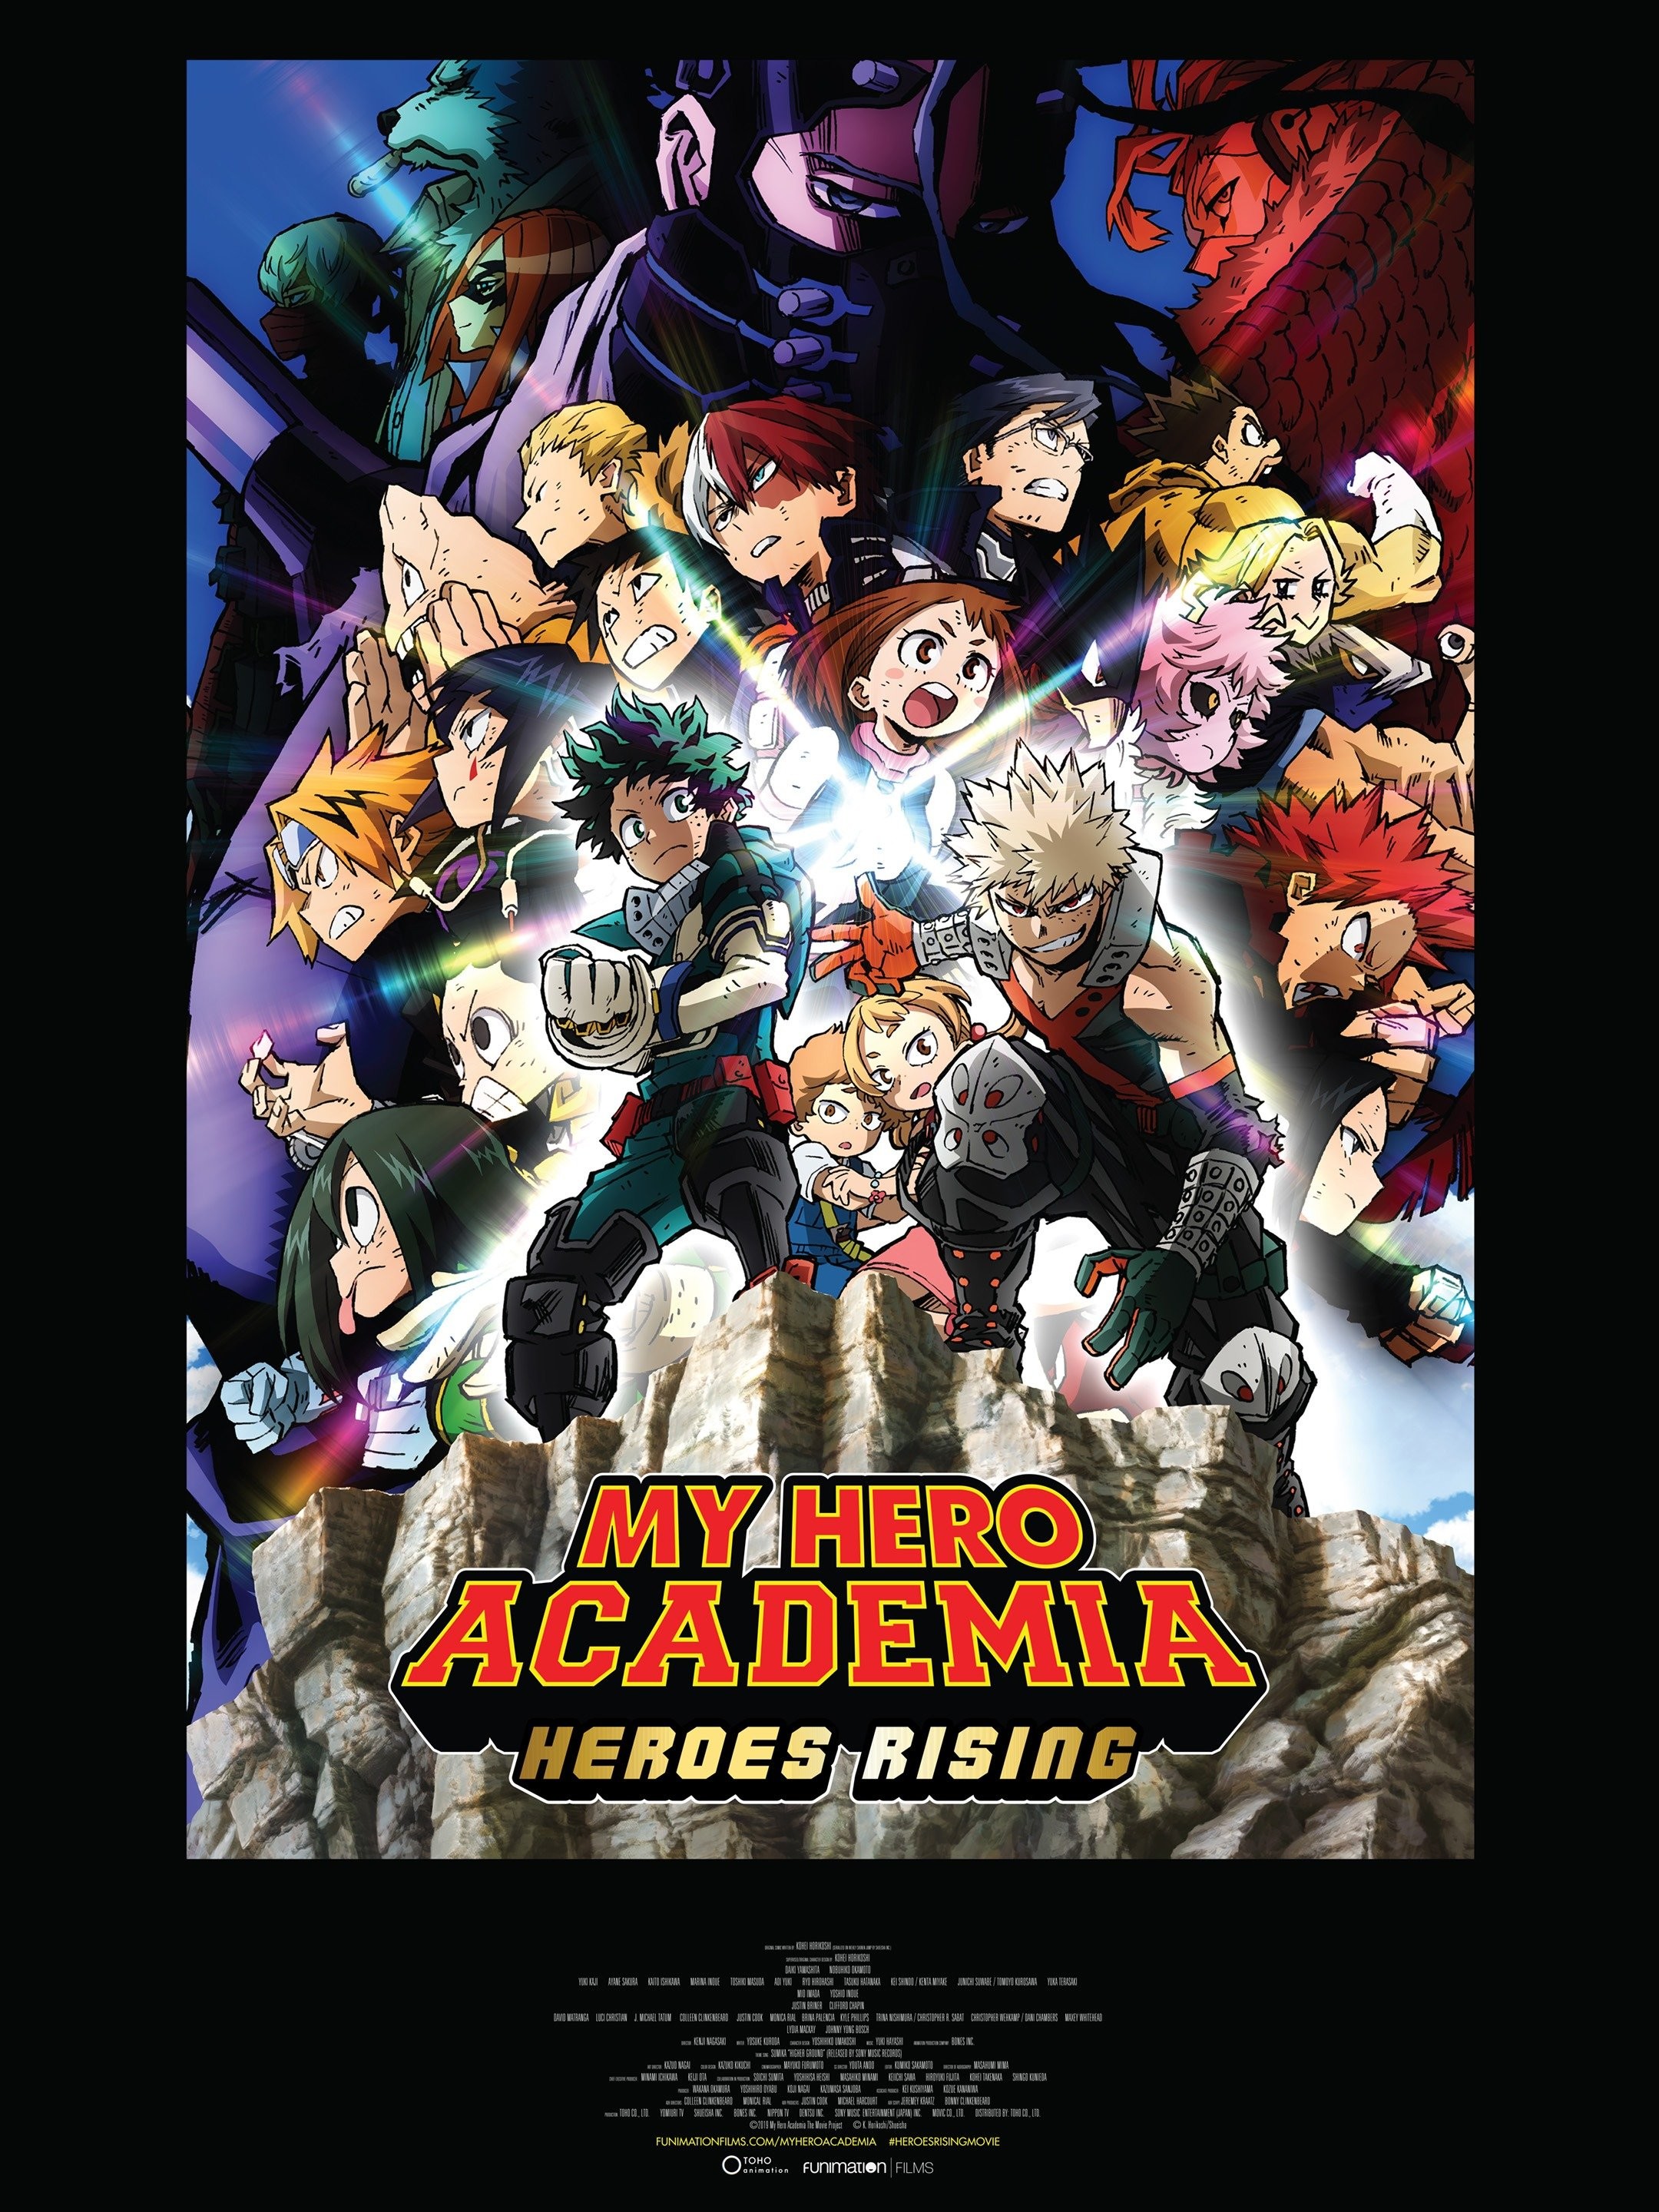 My Hero Academia 4th movie confirmed